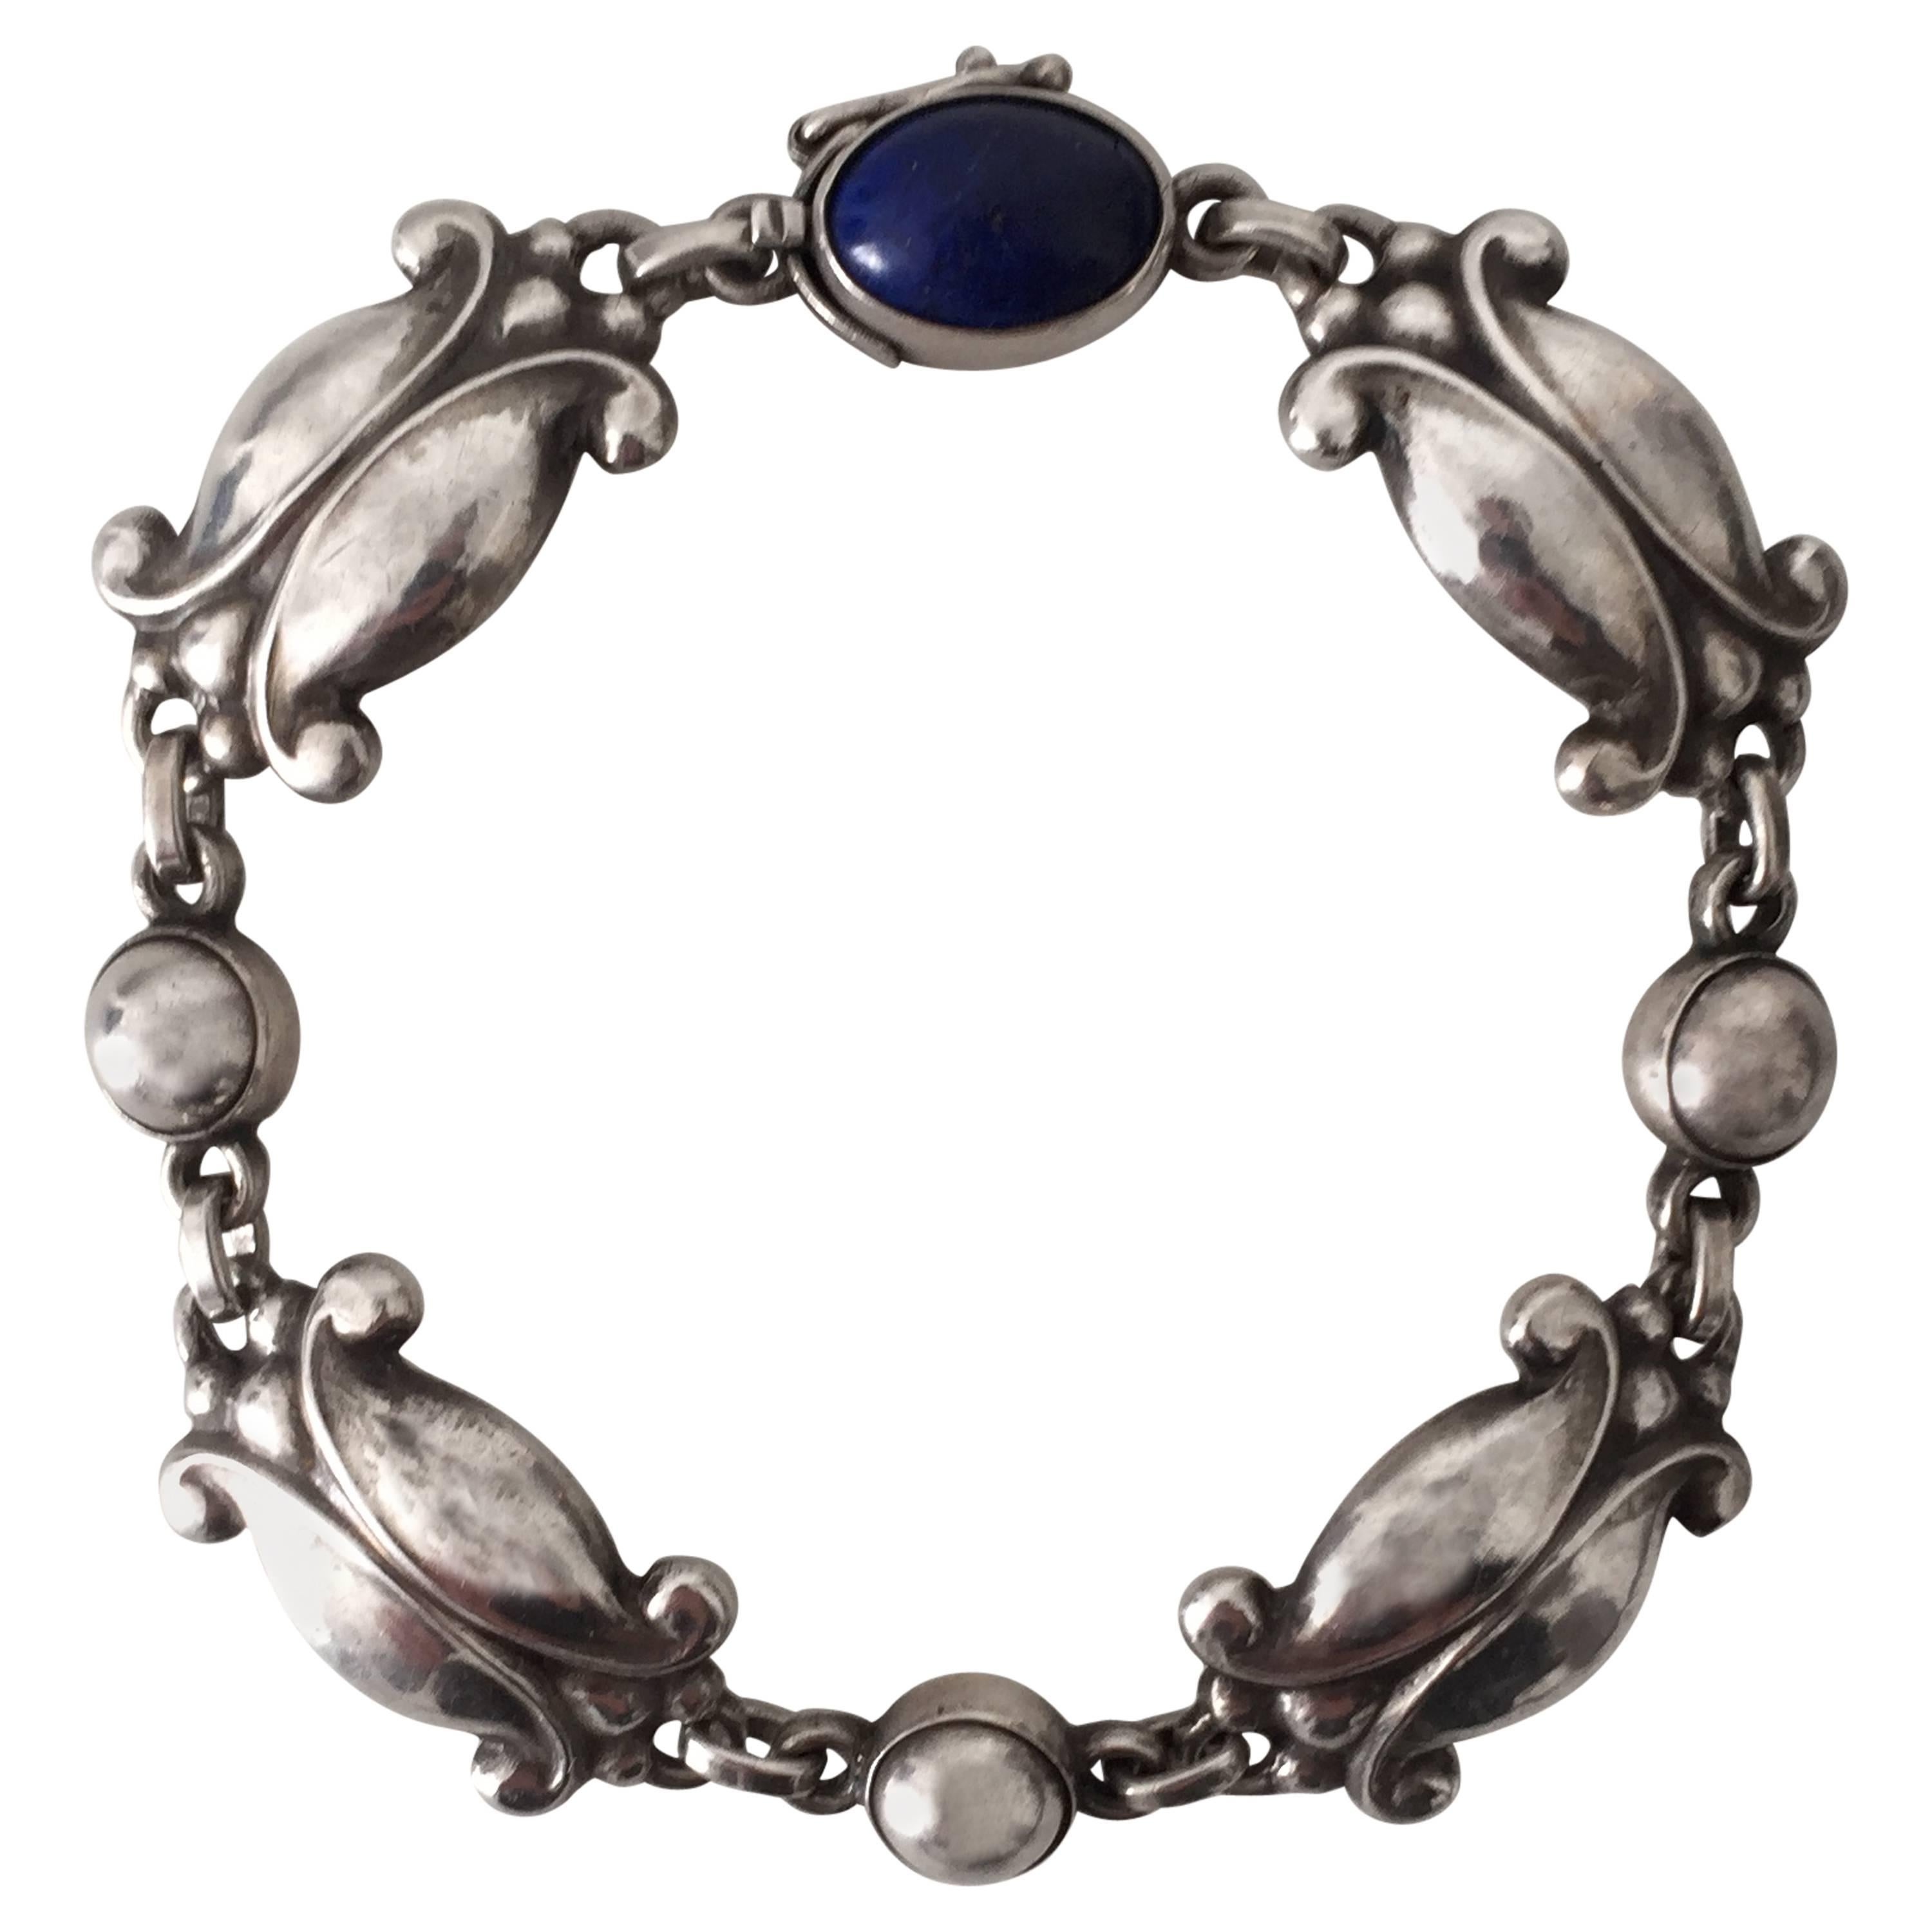 Georg Jensen Sterling Silver Bracelet with Lapis Lazuli